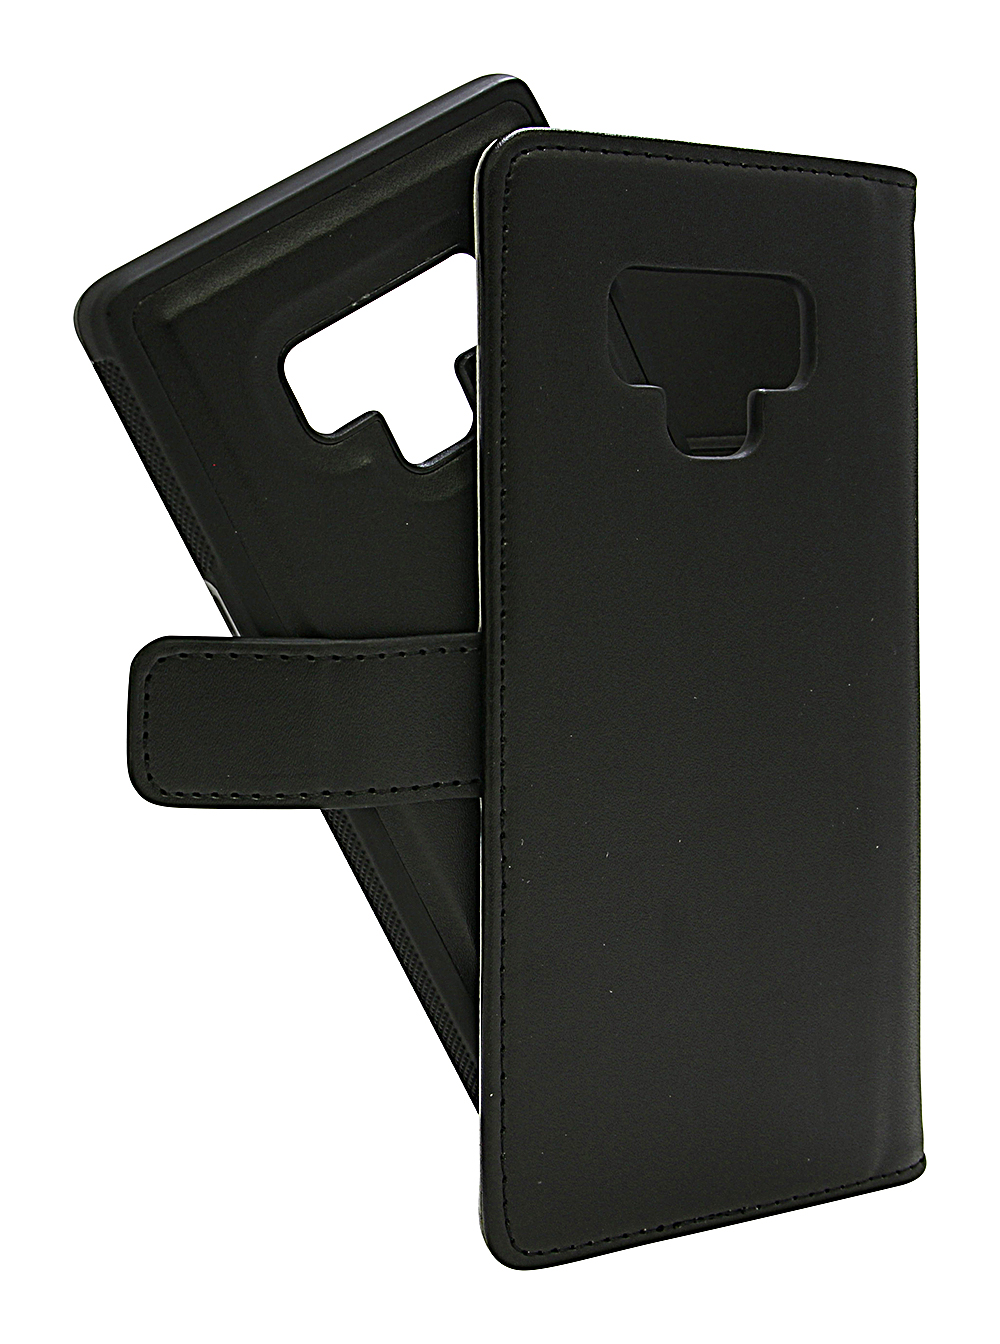 Skimblocker Magnet Wallet Samsung Galaxy Note 9 (N960F/DS)